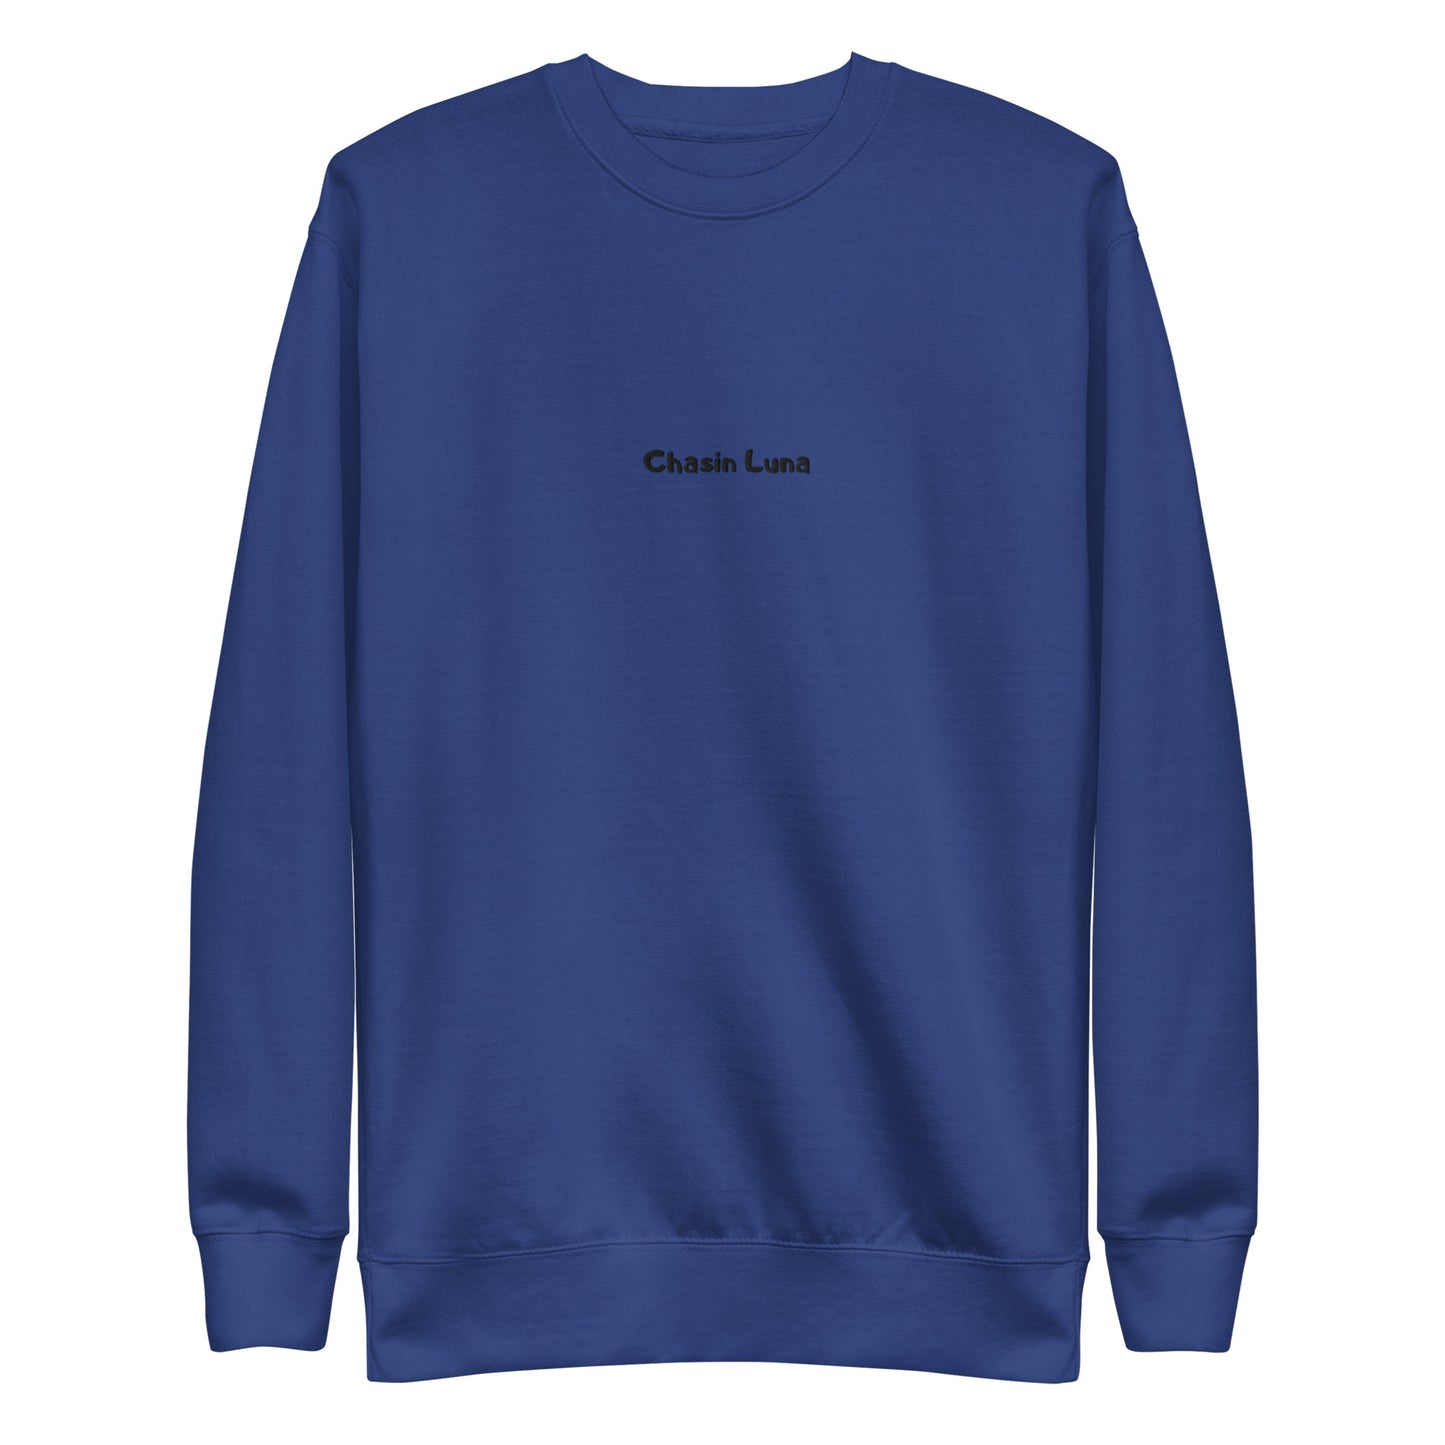 Chasin Luna 24’ Plain Sweater